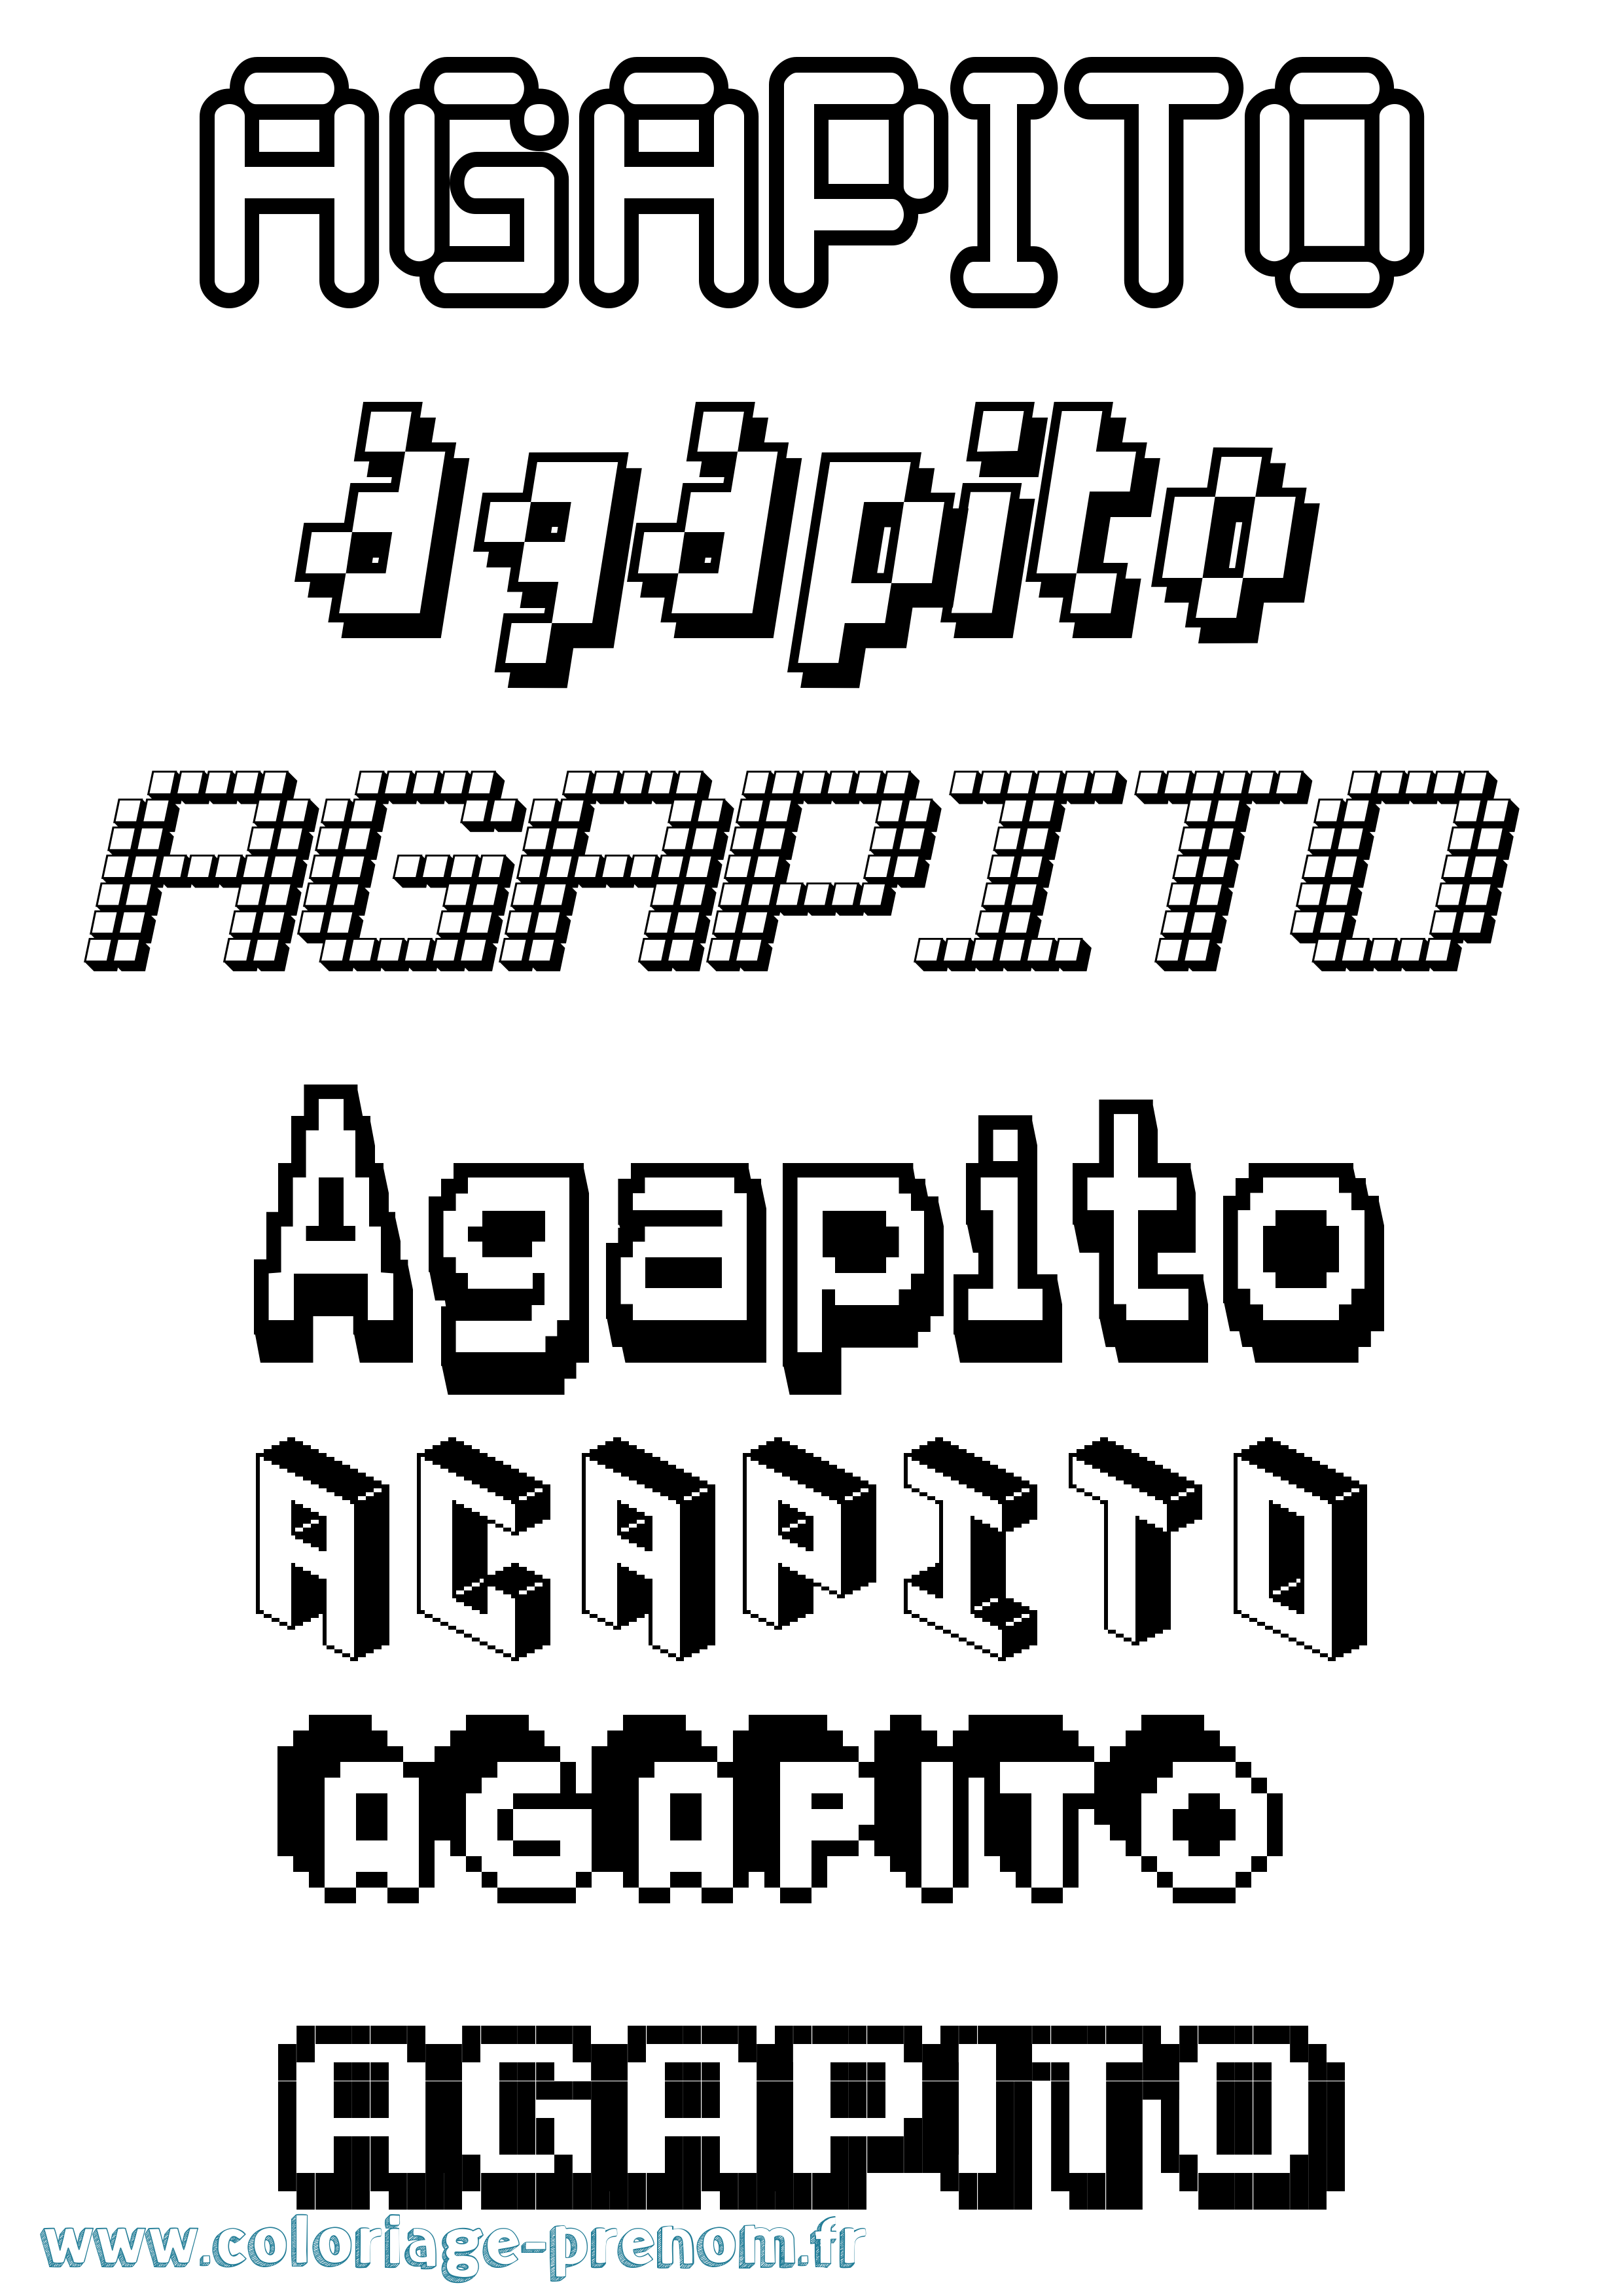 Coloriage prénom Agapito Pixel